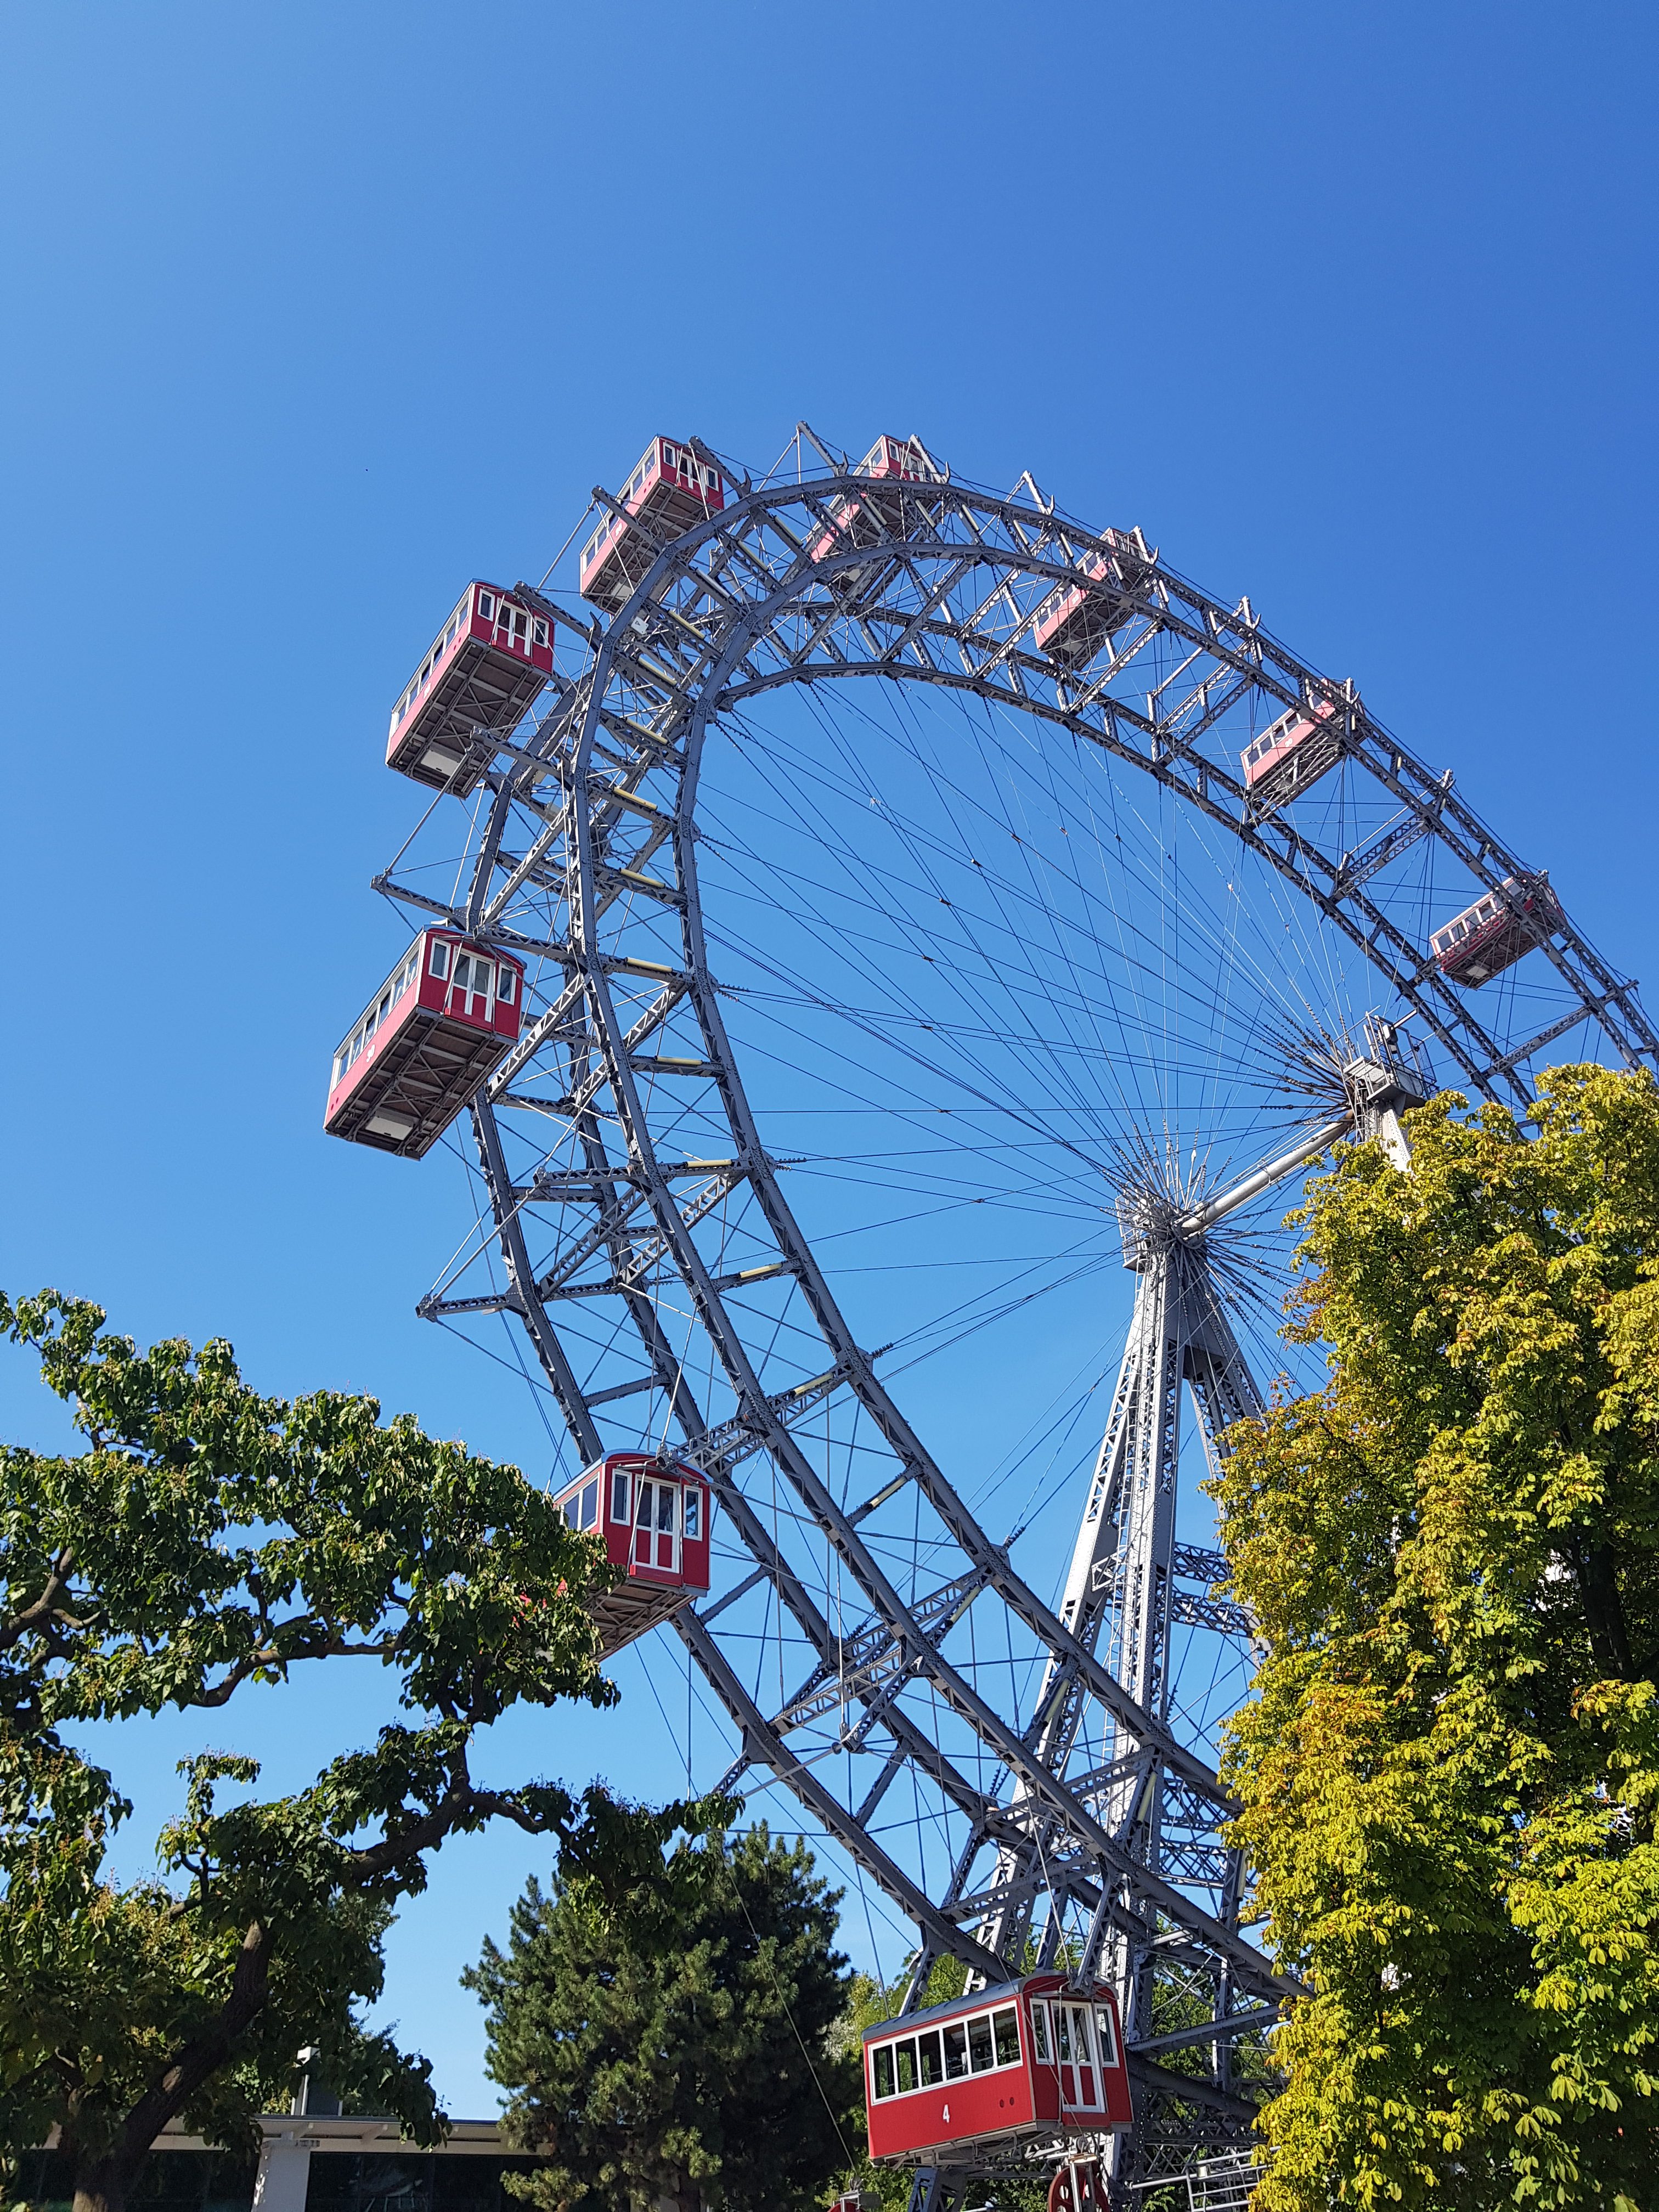 Vienna's Prater giant Ferris wheel